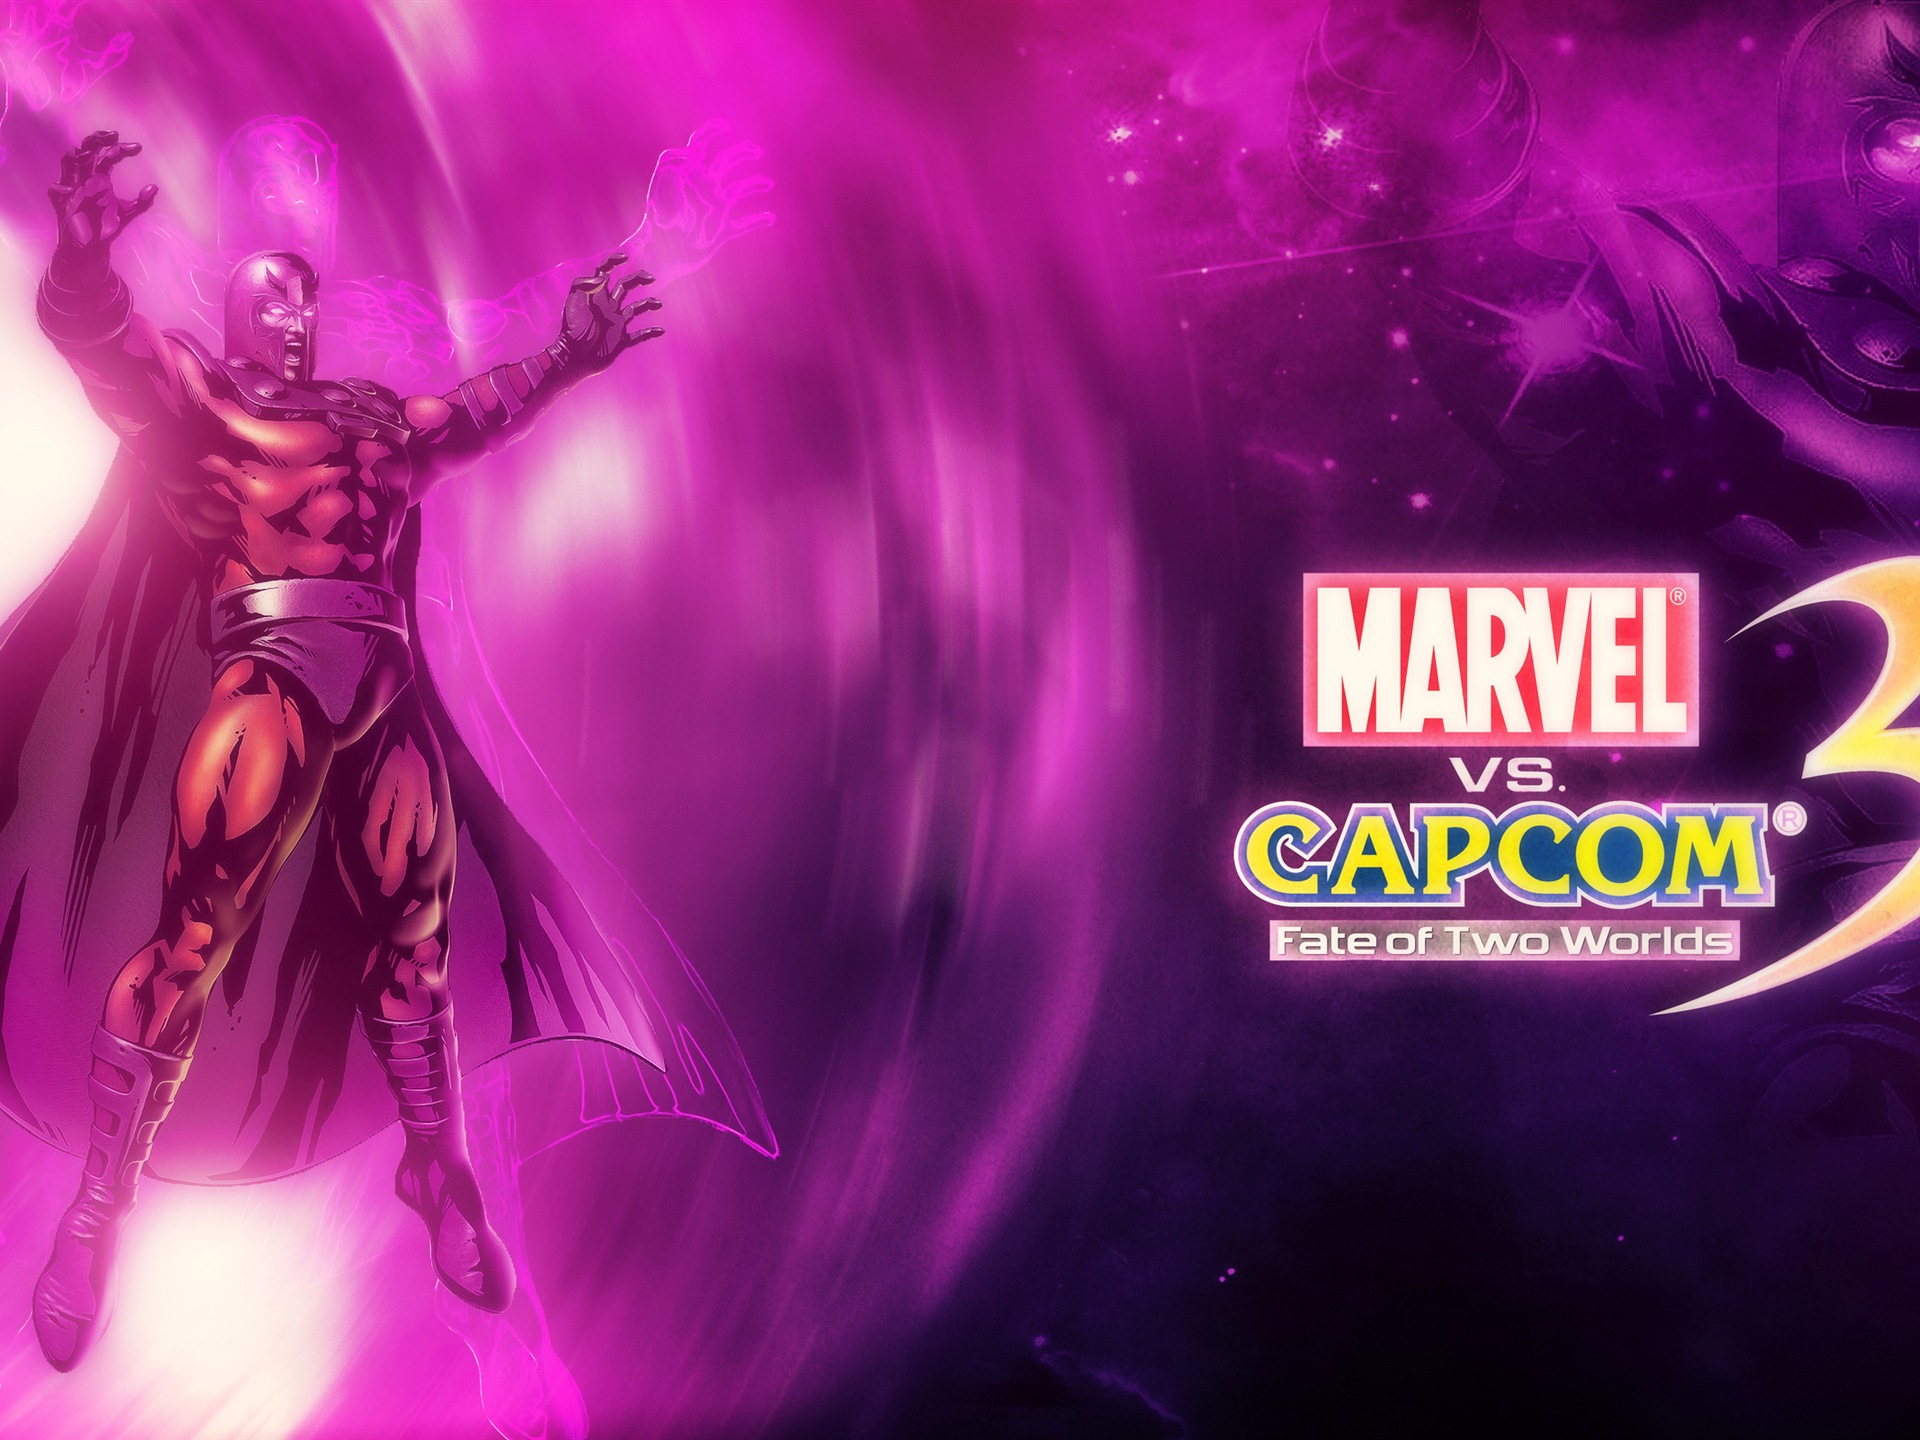 Marvel VS. Capcom 3: Fate of Two Worlds 漫畫英雄VS.卡普空3 高清遊戲壁紙 #7 - 1920x1440